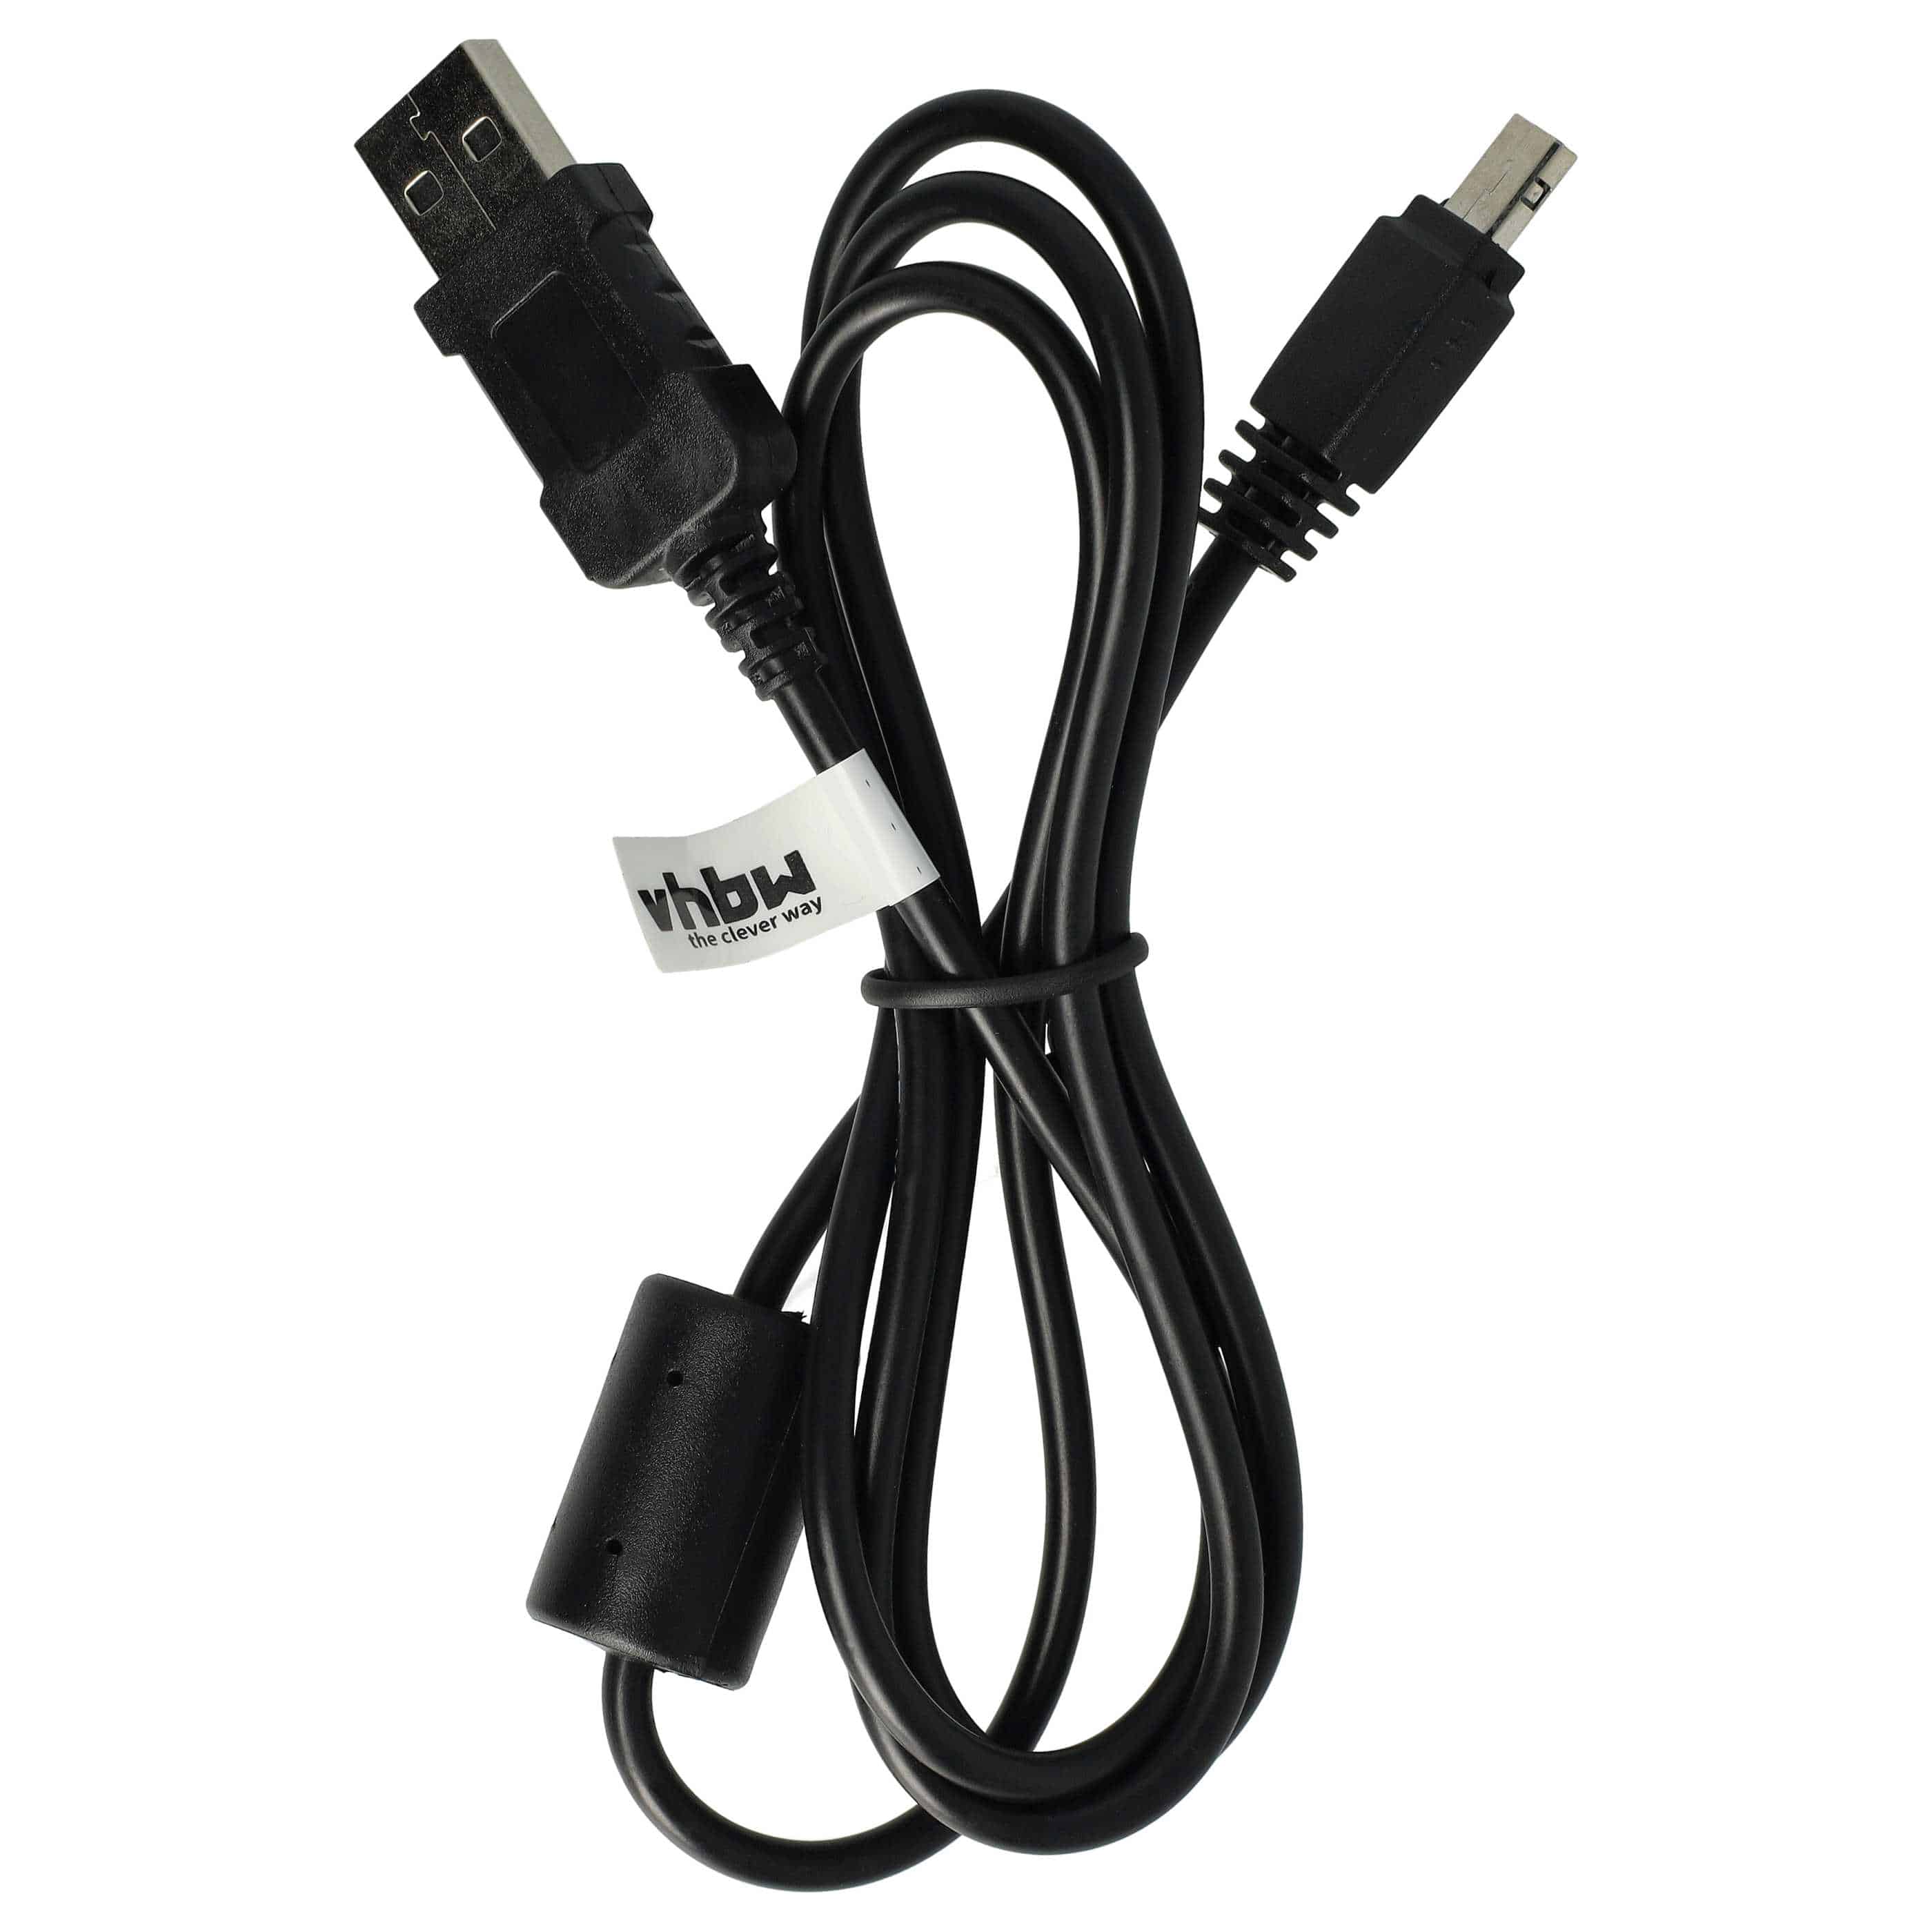 Kabel USB do aparatu Casio zamiennik Casio U-8, EMC-6U, EMC-6 - 100 cm 